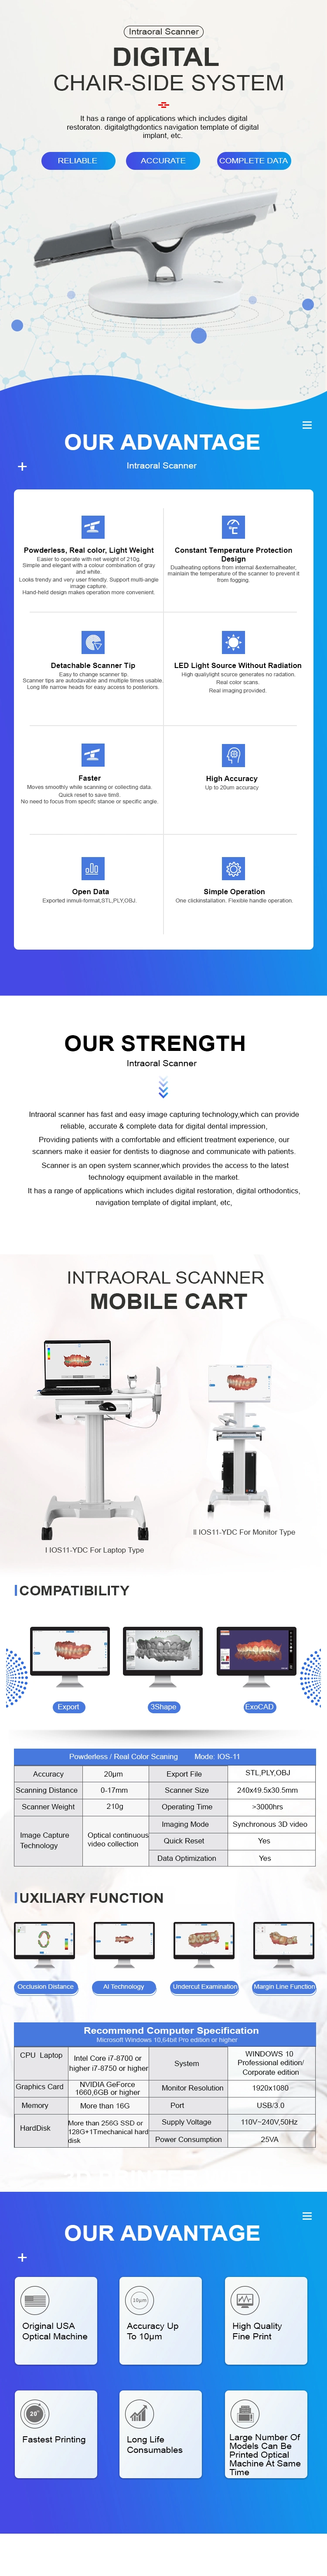 CE Approved Digital 3D Intraoral Scanner Series for Dental Use